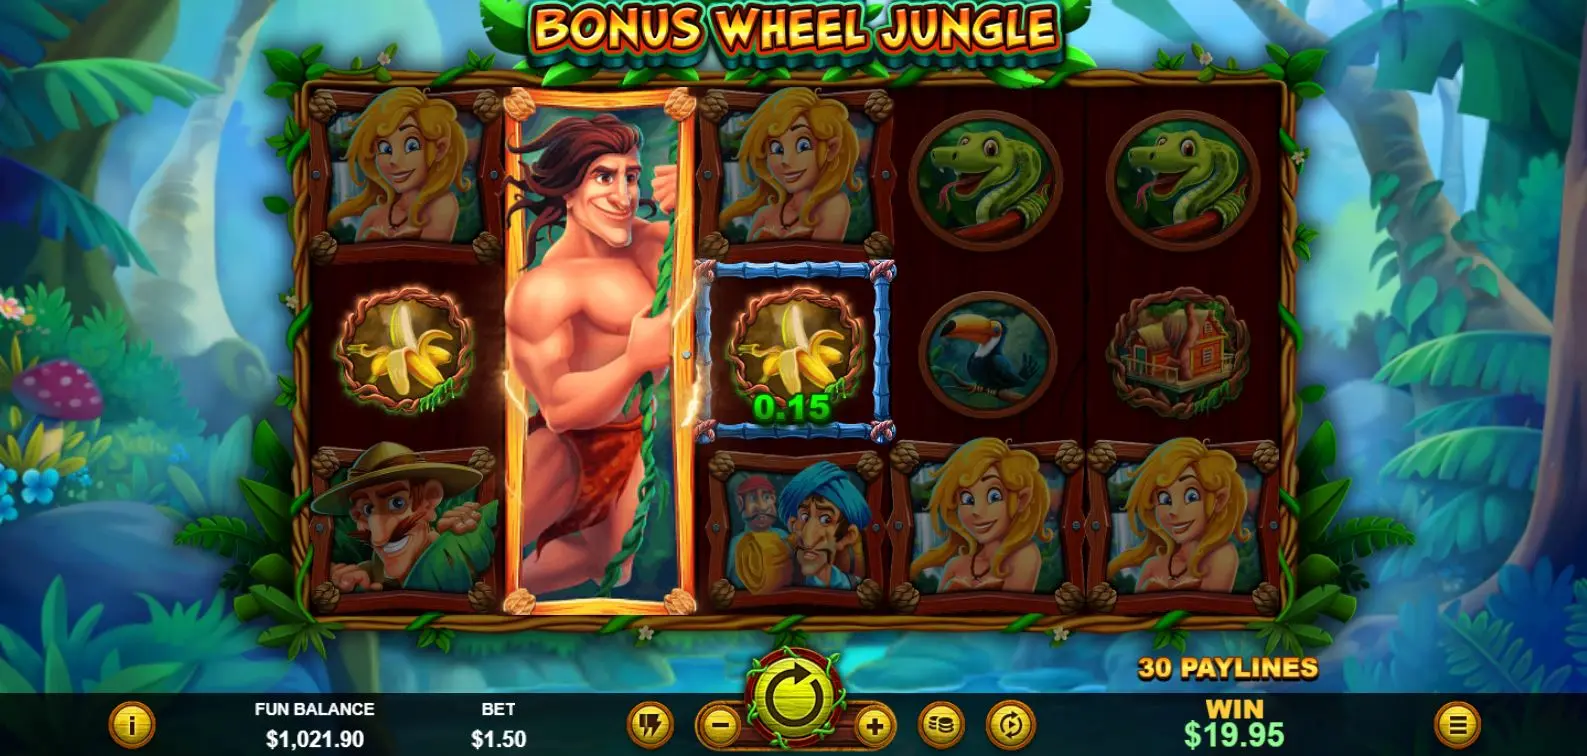 Bonus Wheel Jungle symbols